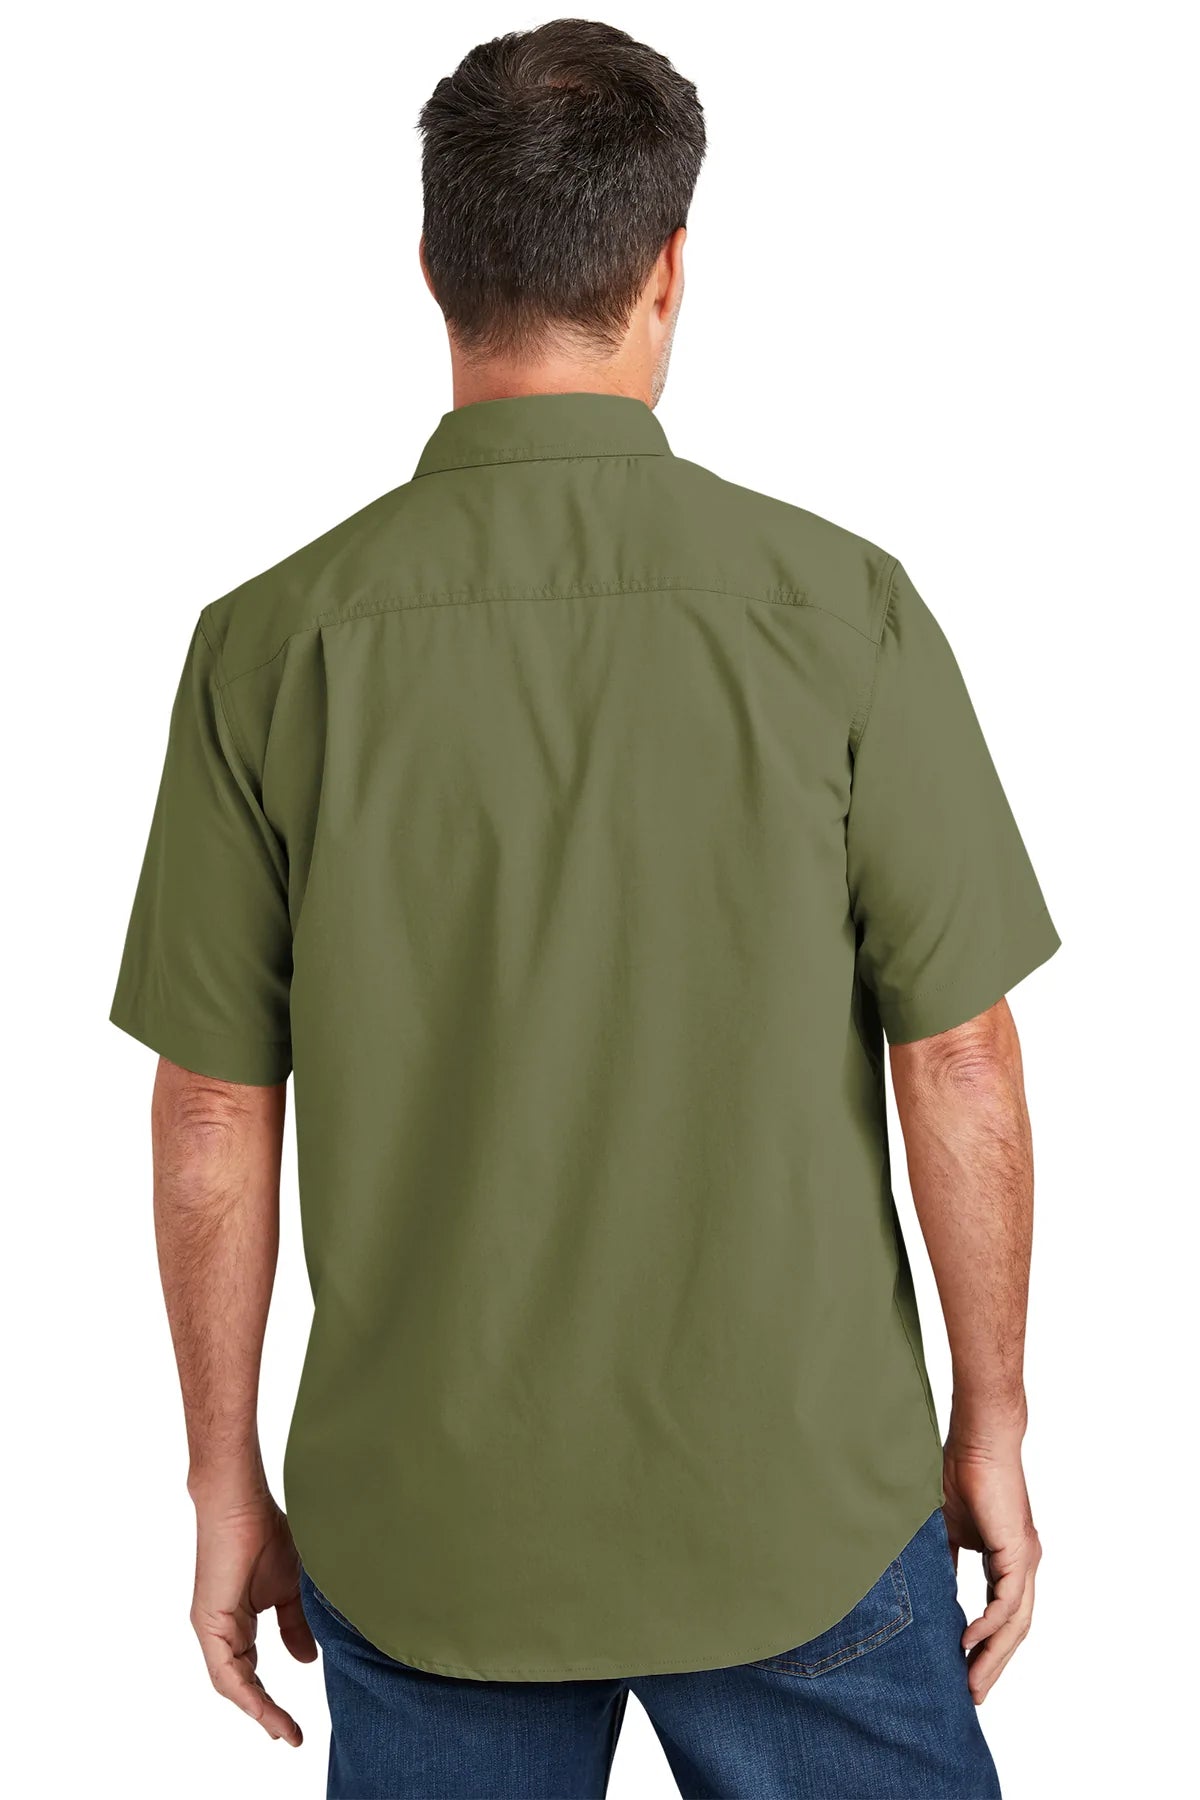 Carhartt Force Solid Custom Shirts, Burnt Olive